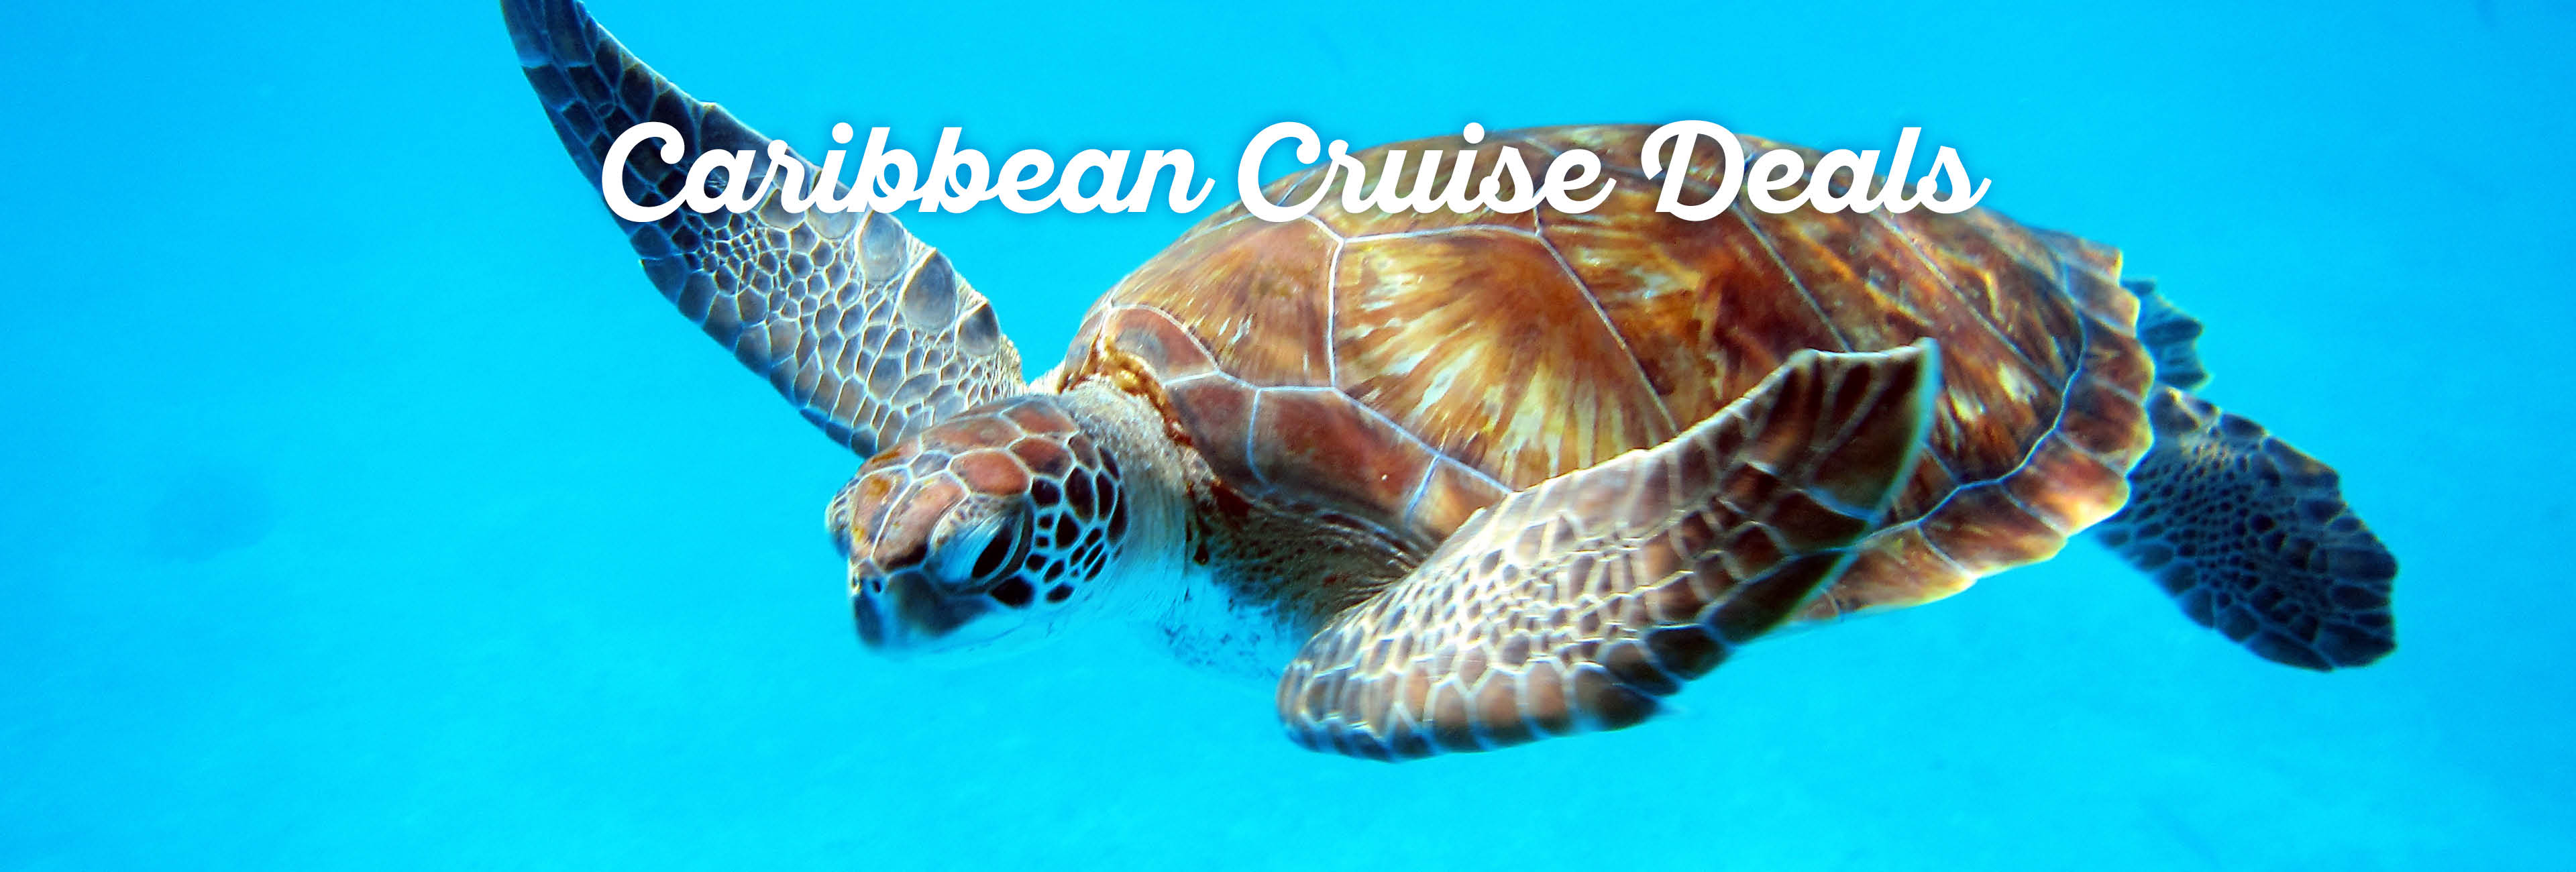 caribbean-cruise-deals1.jpg